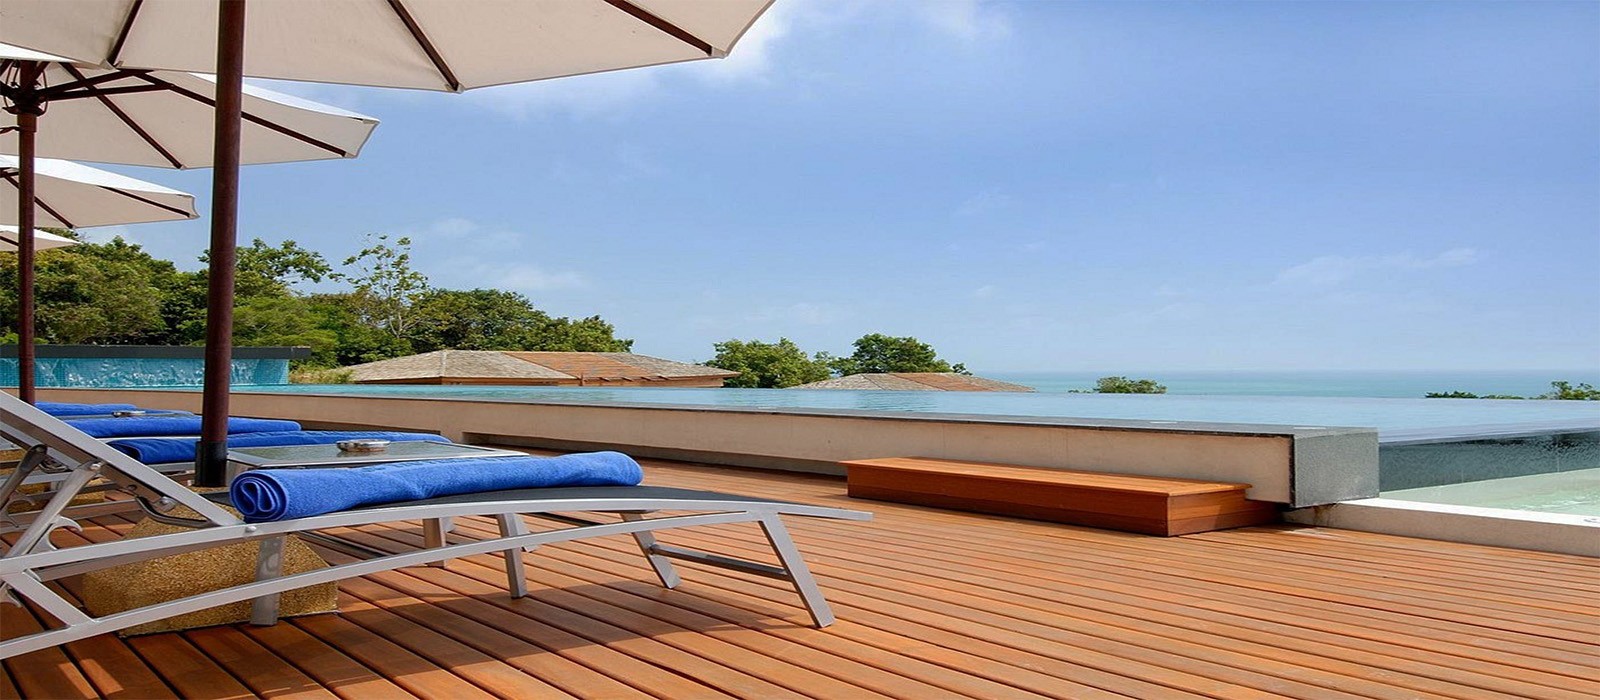 KC resort & overwater villas - Luxury Thailand holiday packages - header